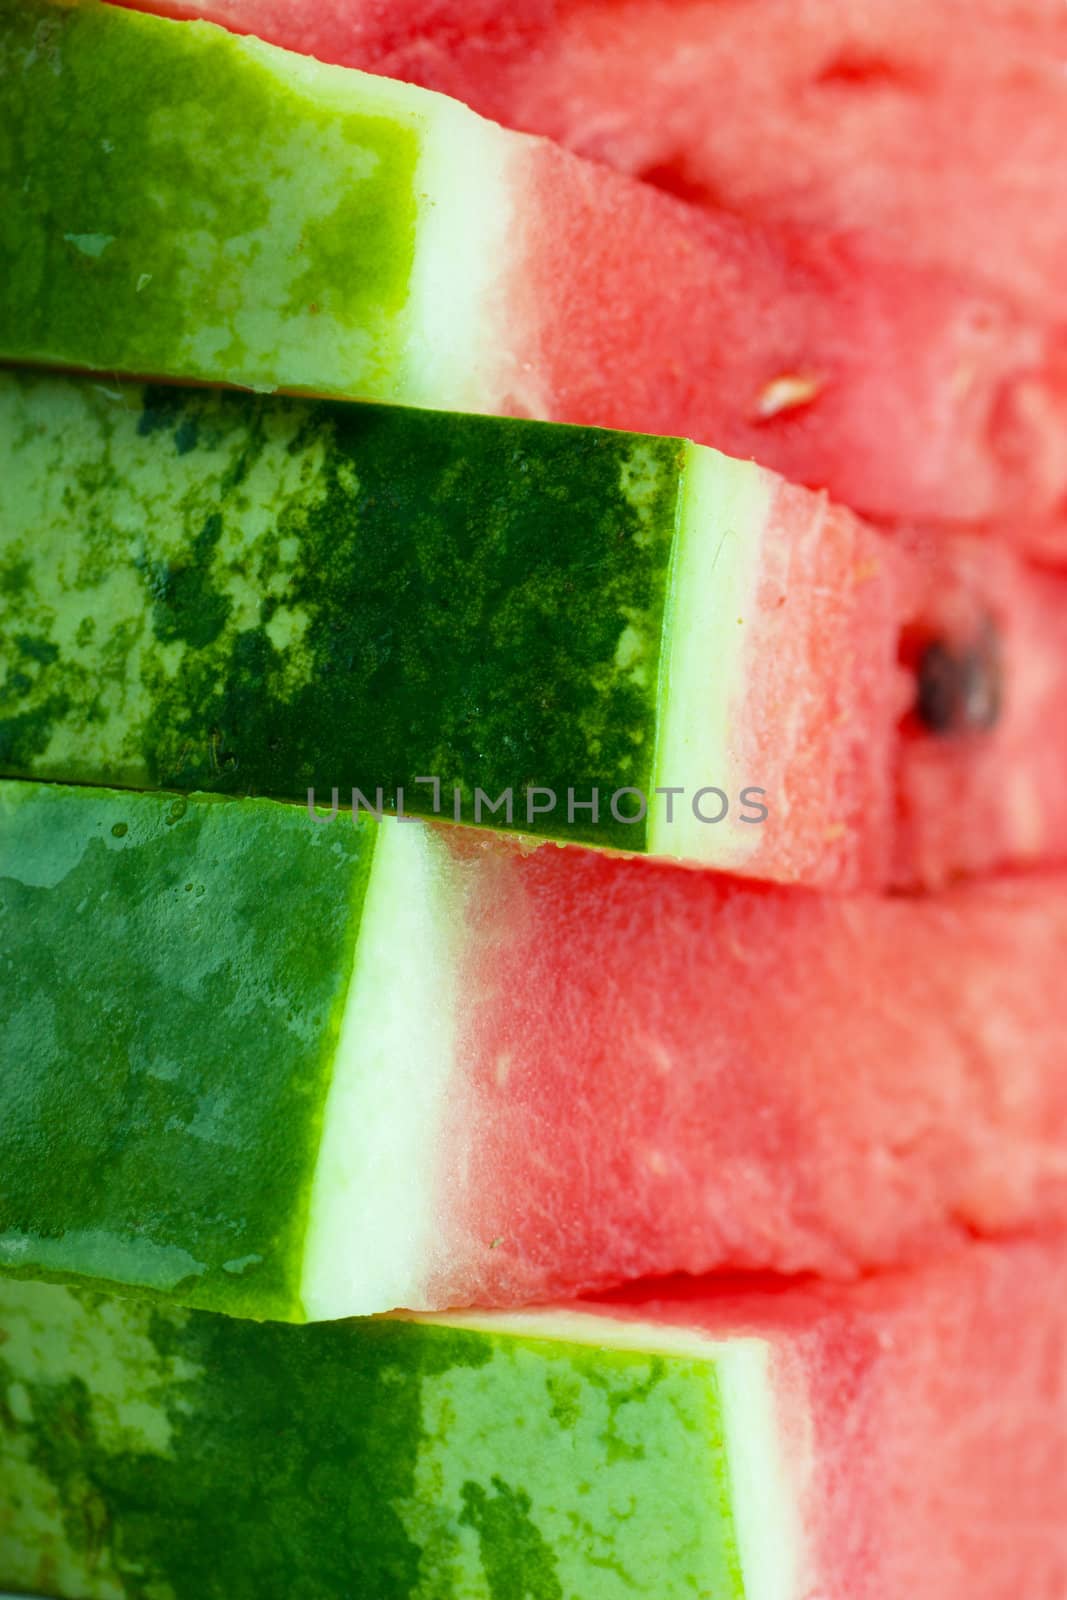 Macro view of fresh watermelon slices